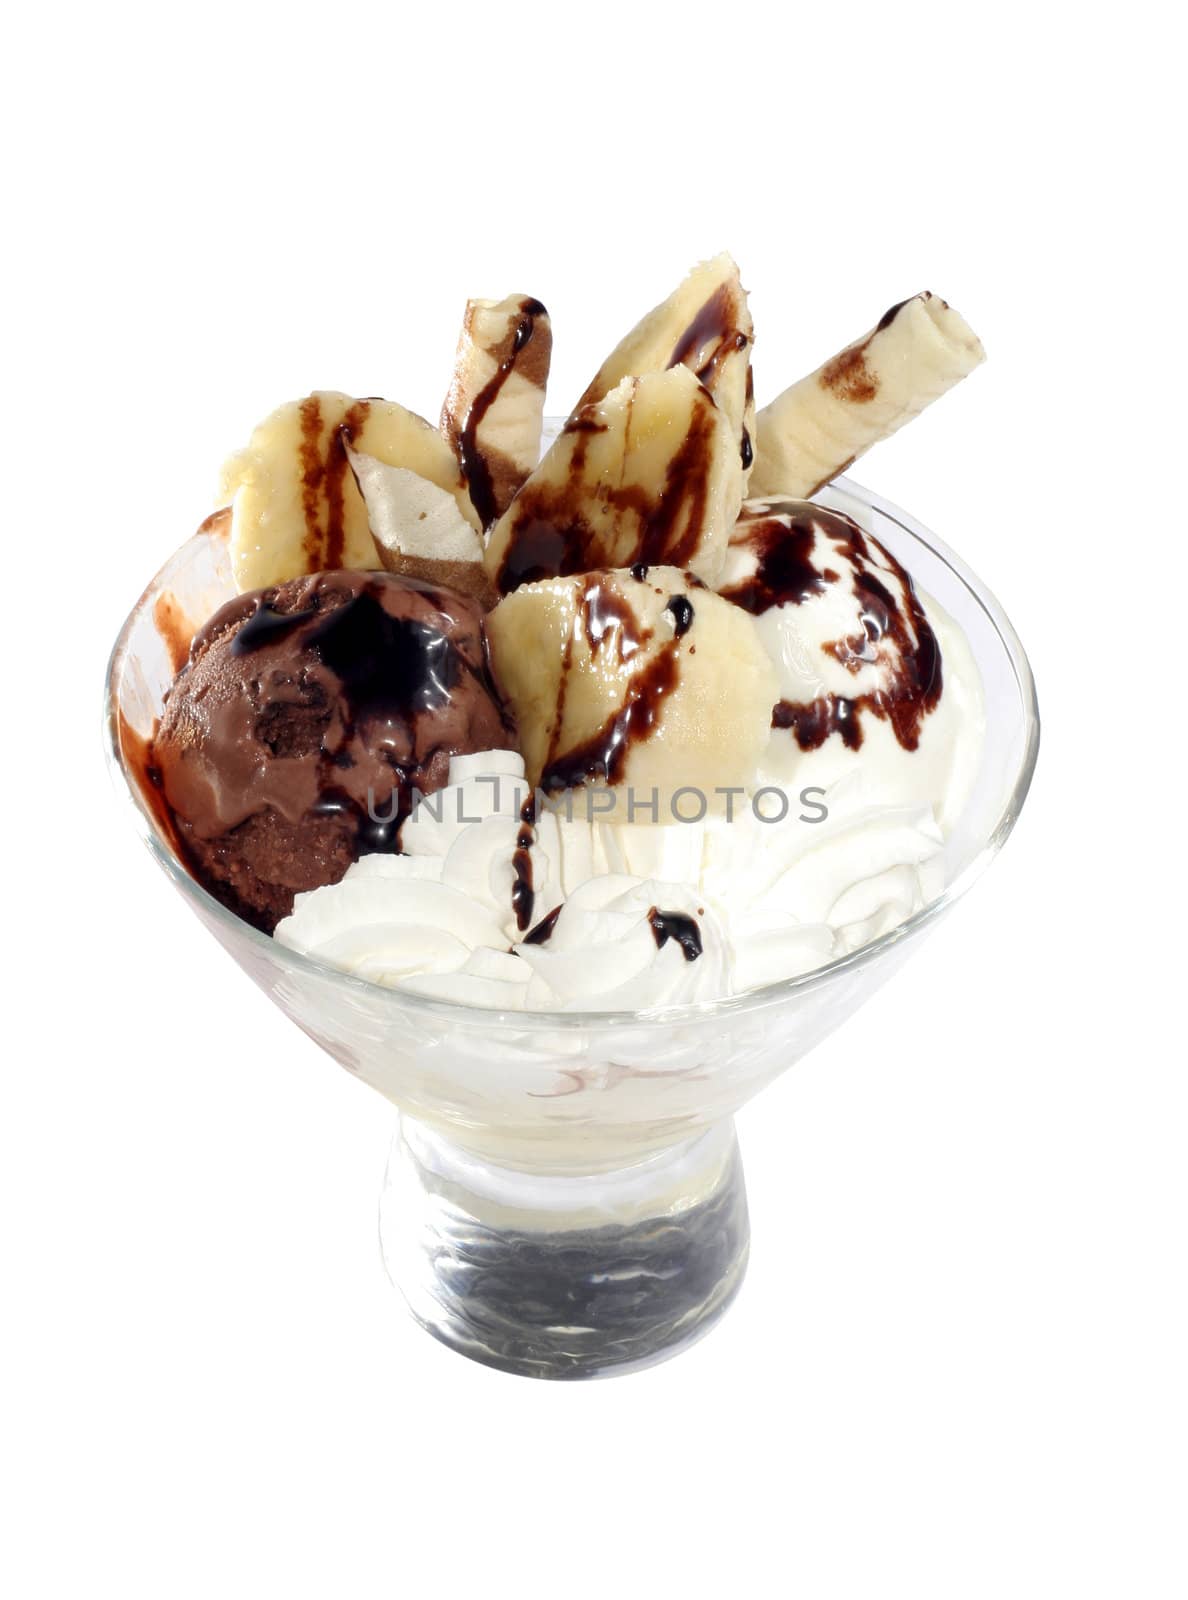 dessert with banana and chocolate icecream